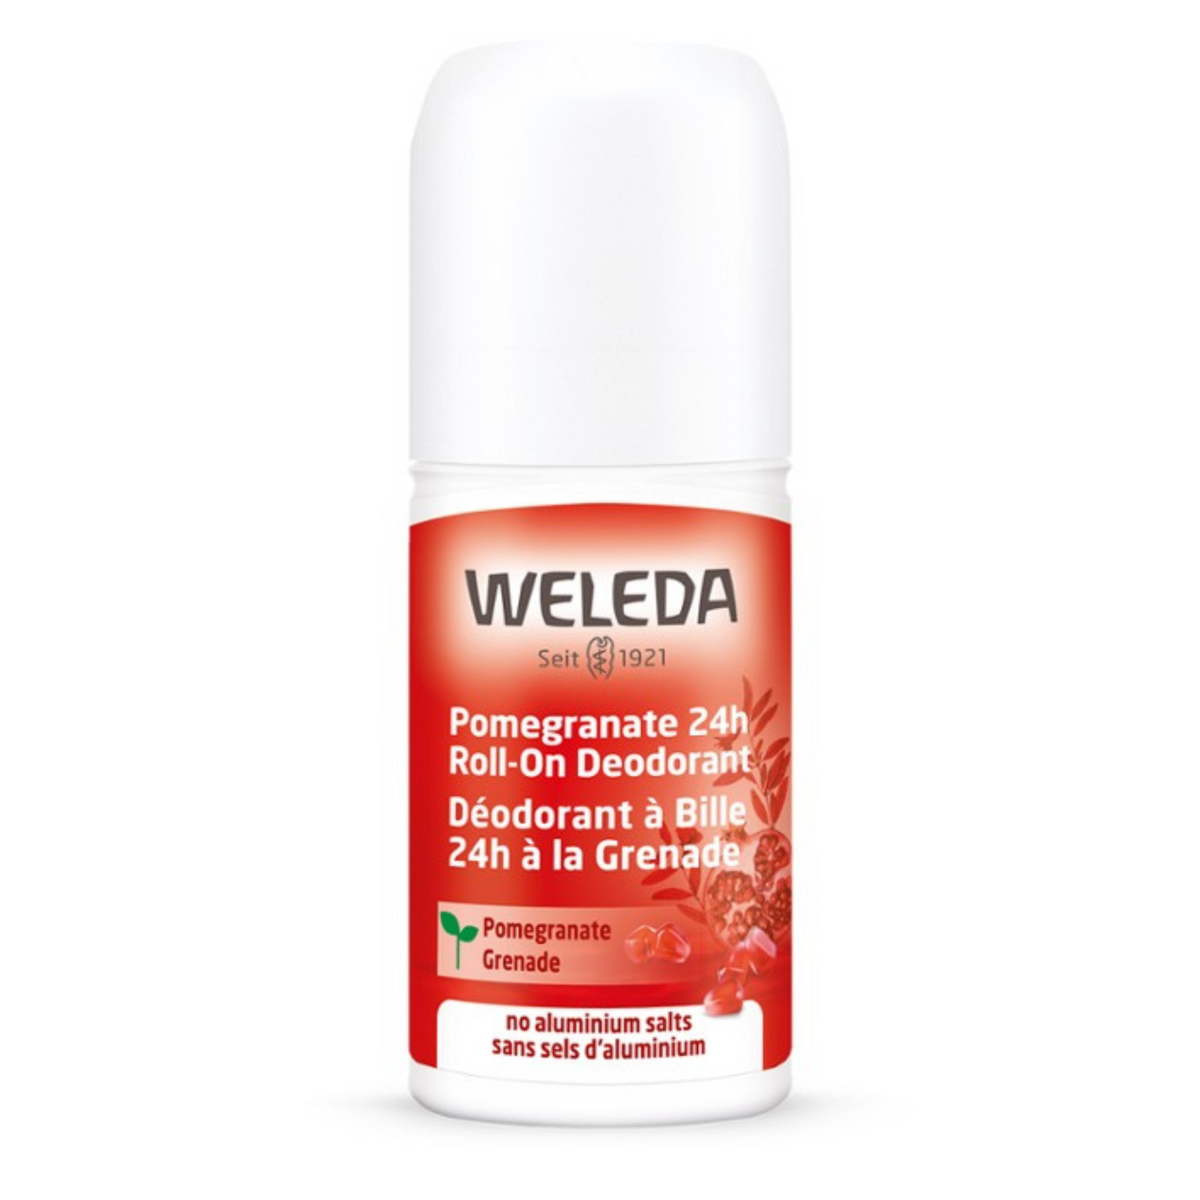 Weleda 24h Roll-On Deodorant - Pomegranate